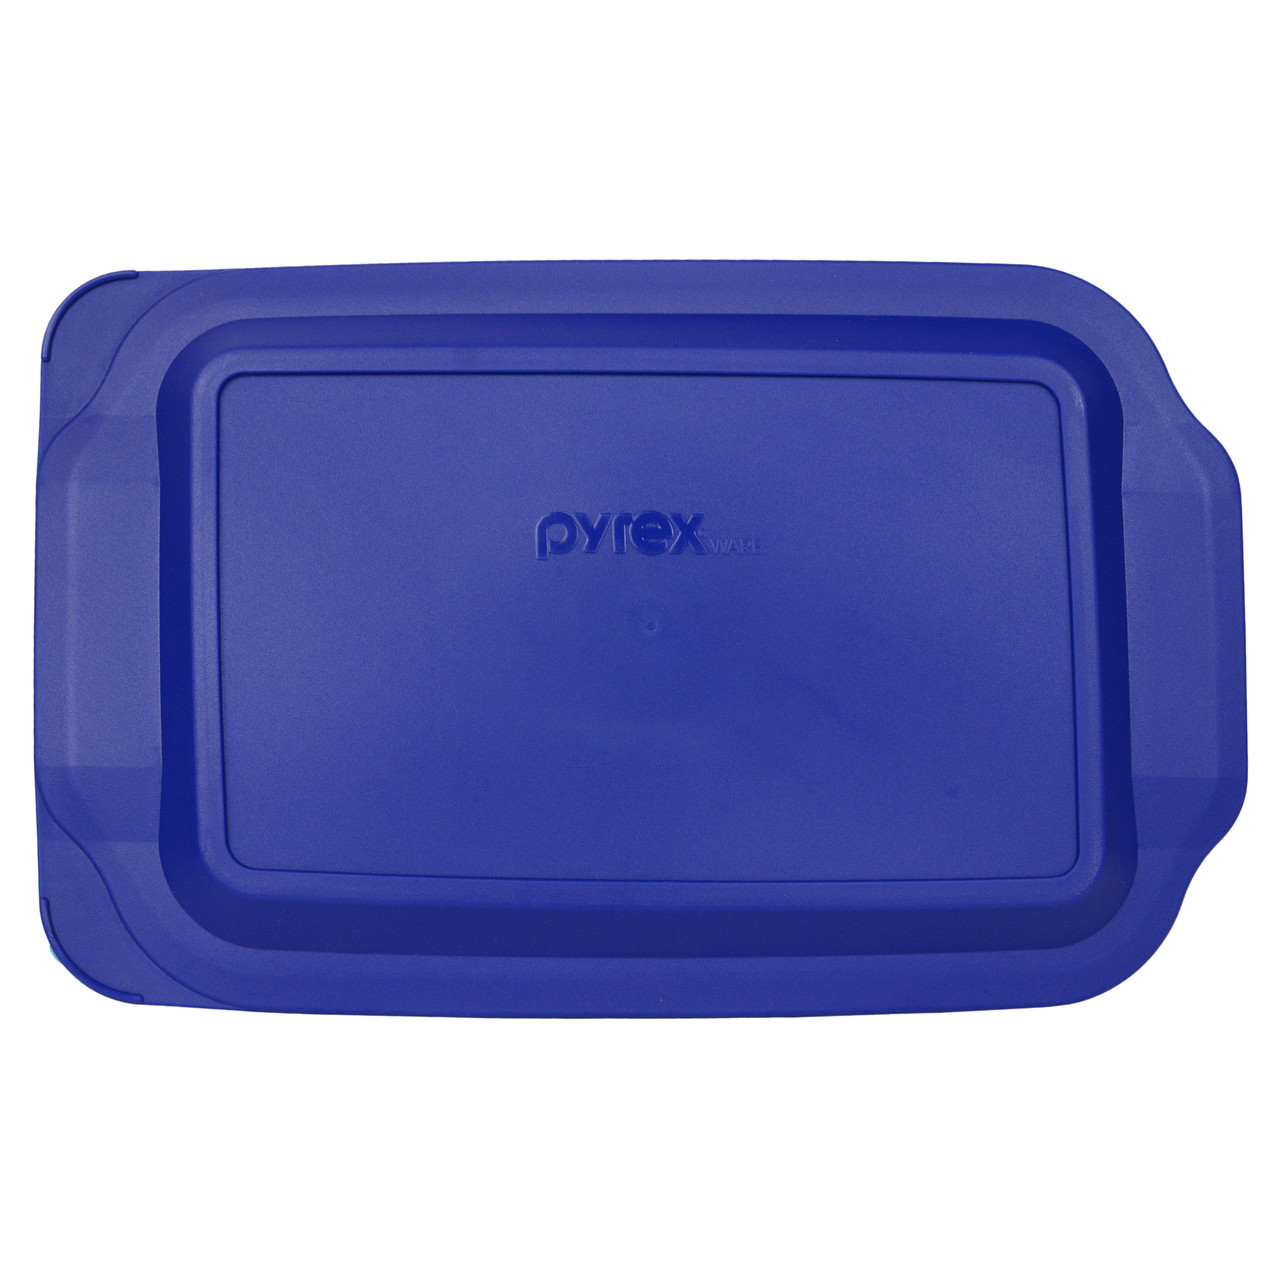 Pyrex 233 3qt Glass Baking Dish with 233-PC 3qt Blue Lagoon Lid